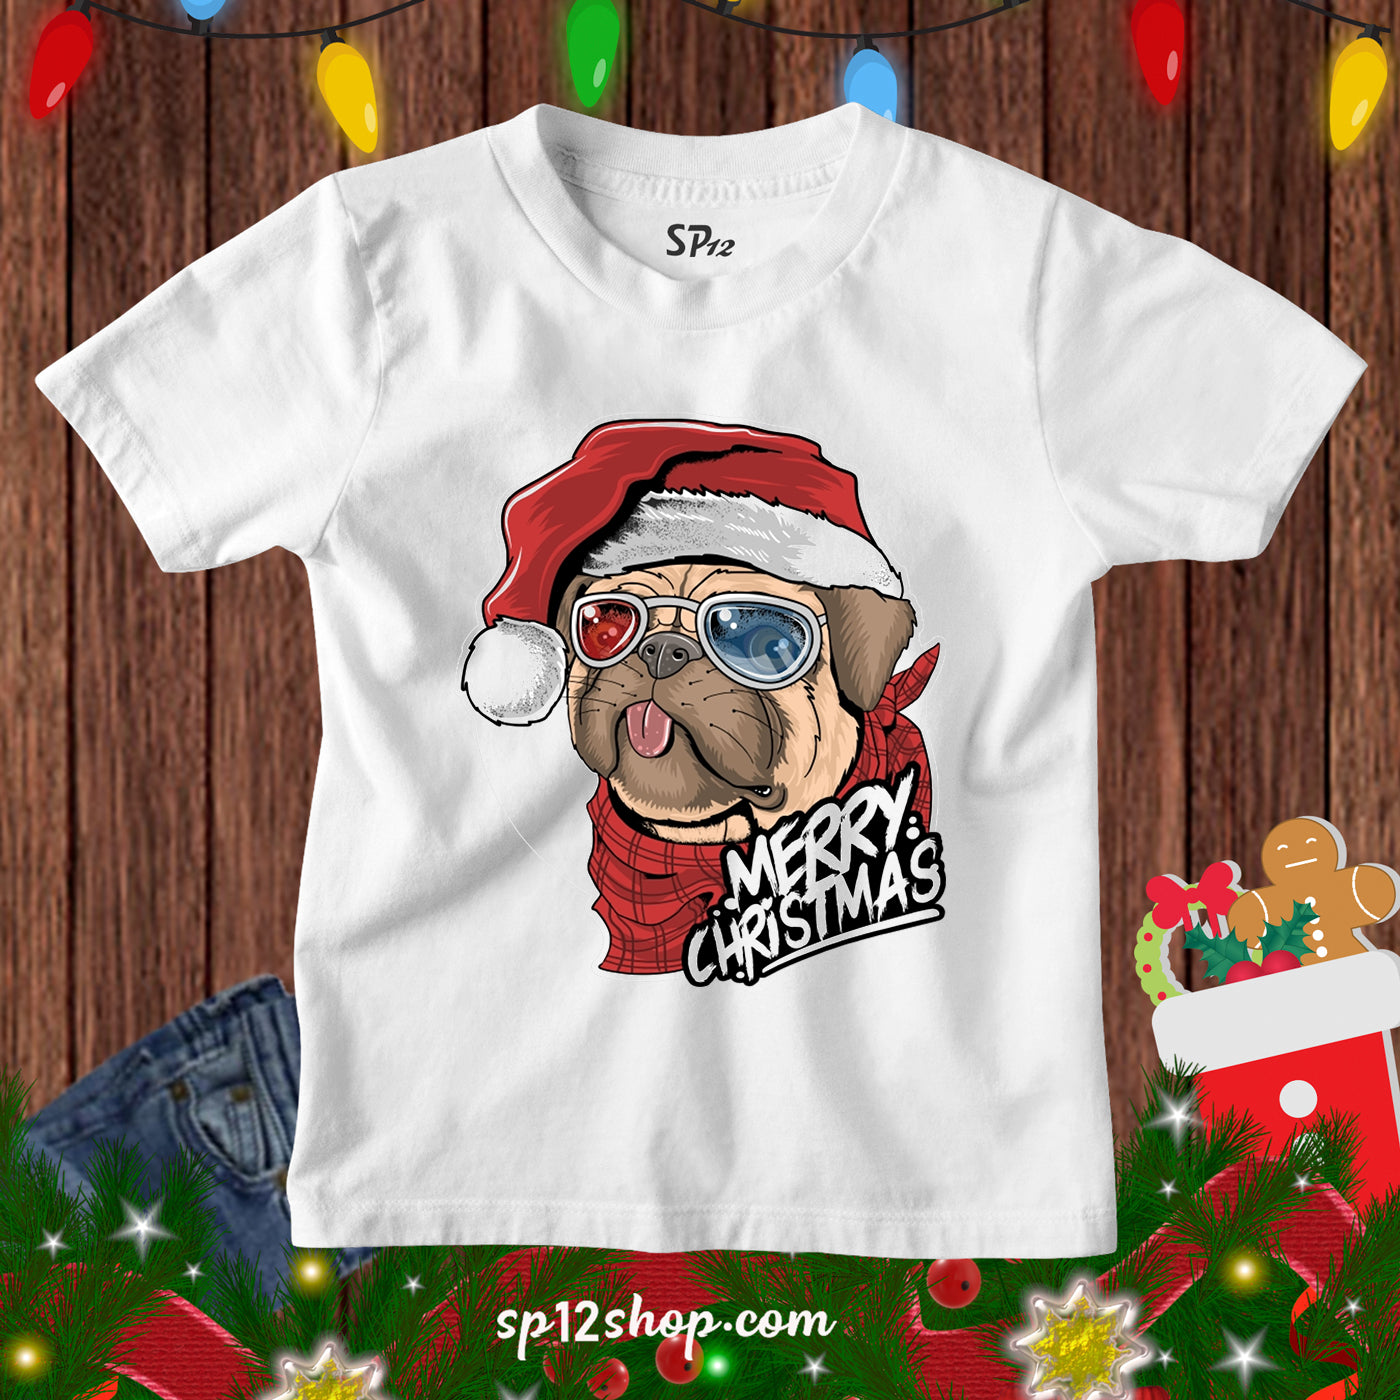 Merry Christmas Dog Lover friends Kids Gift Tee T-shirt